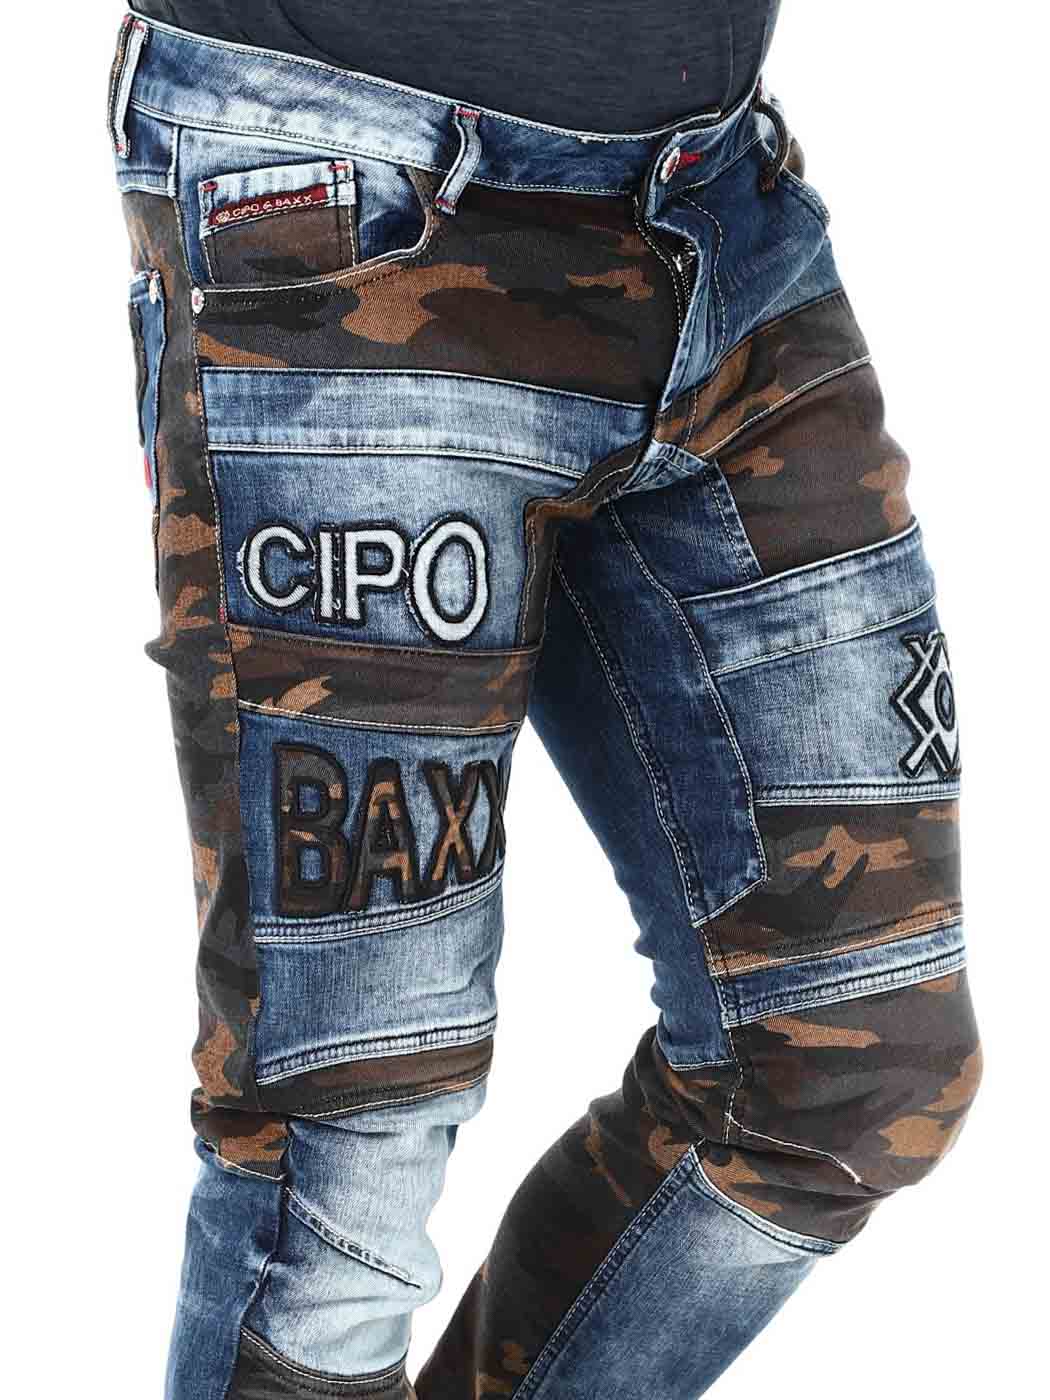 Road Rage Cipo Baxx Jeans - Blue_4.jpg